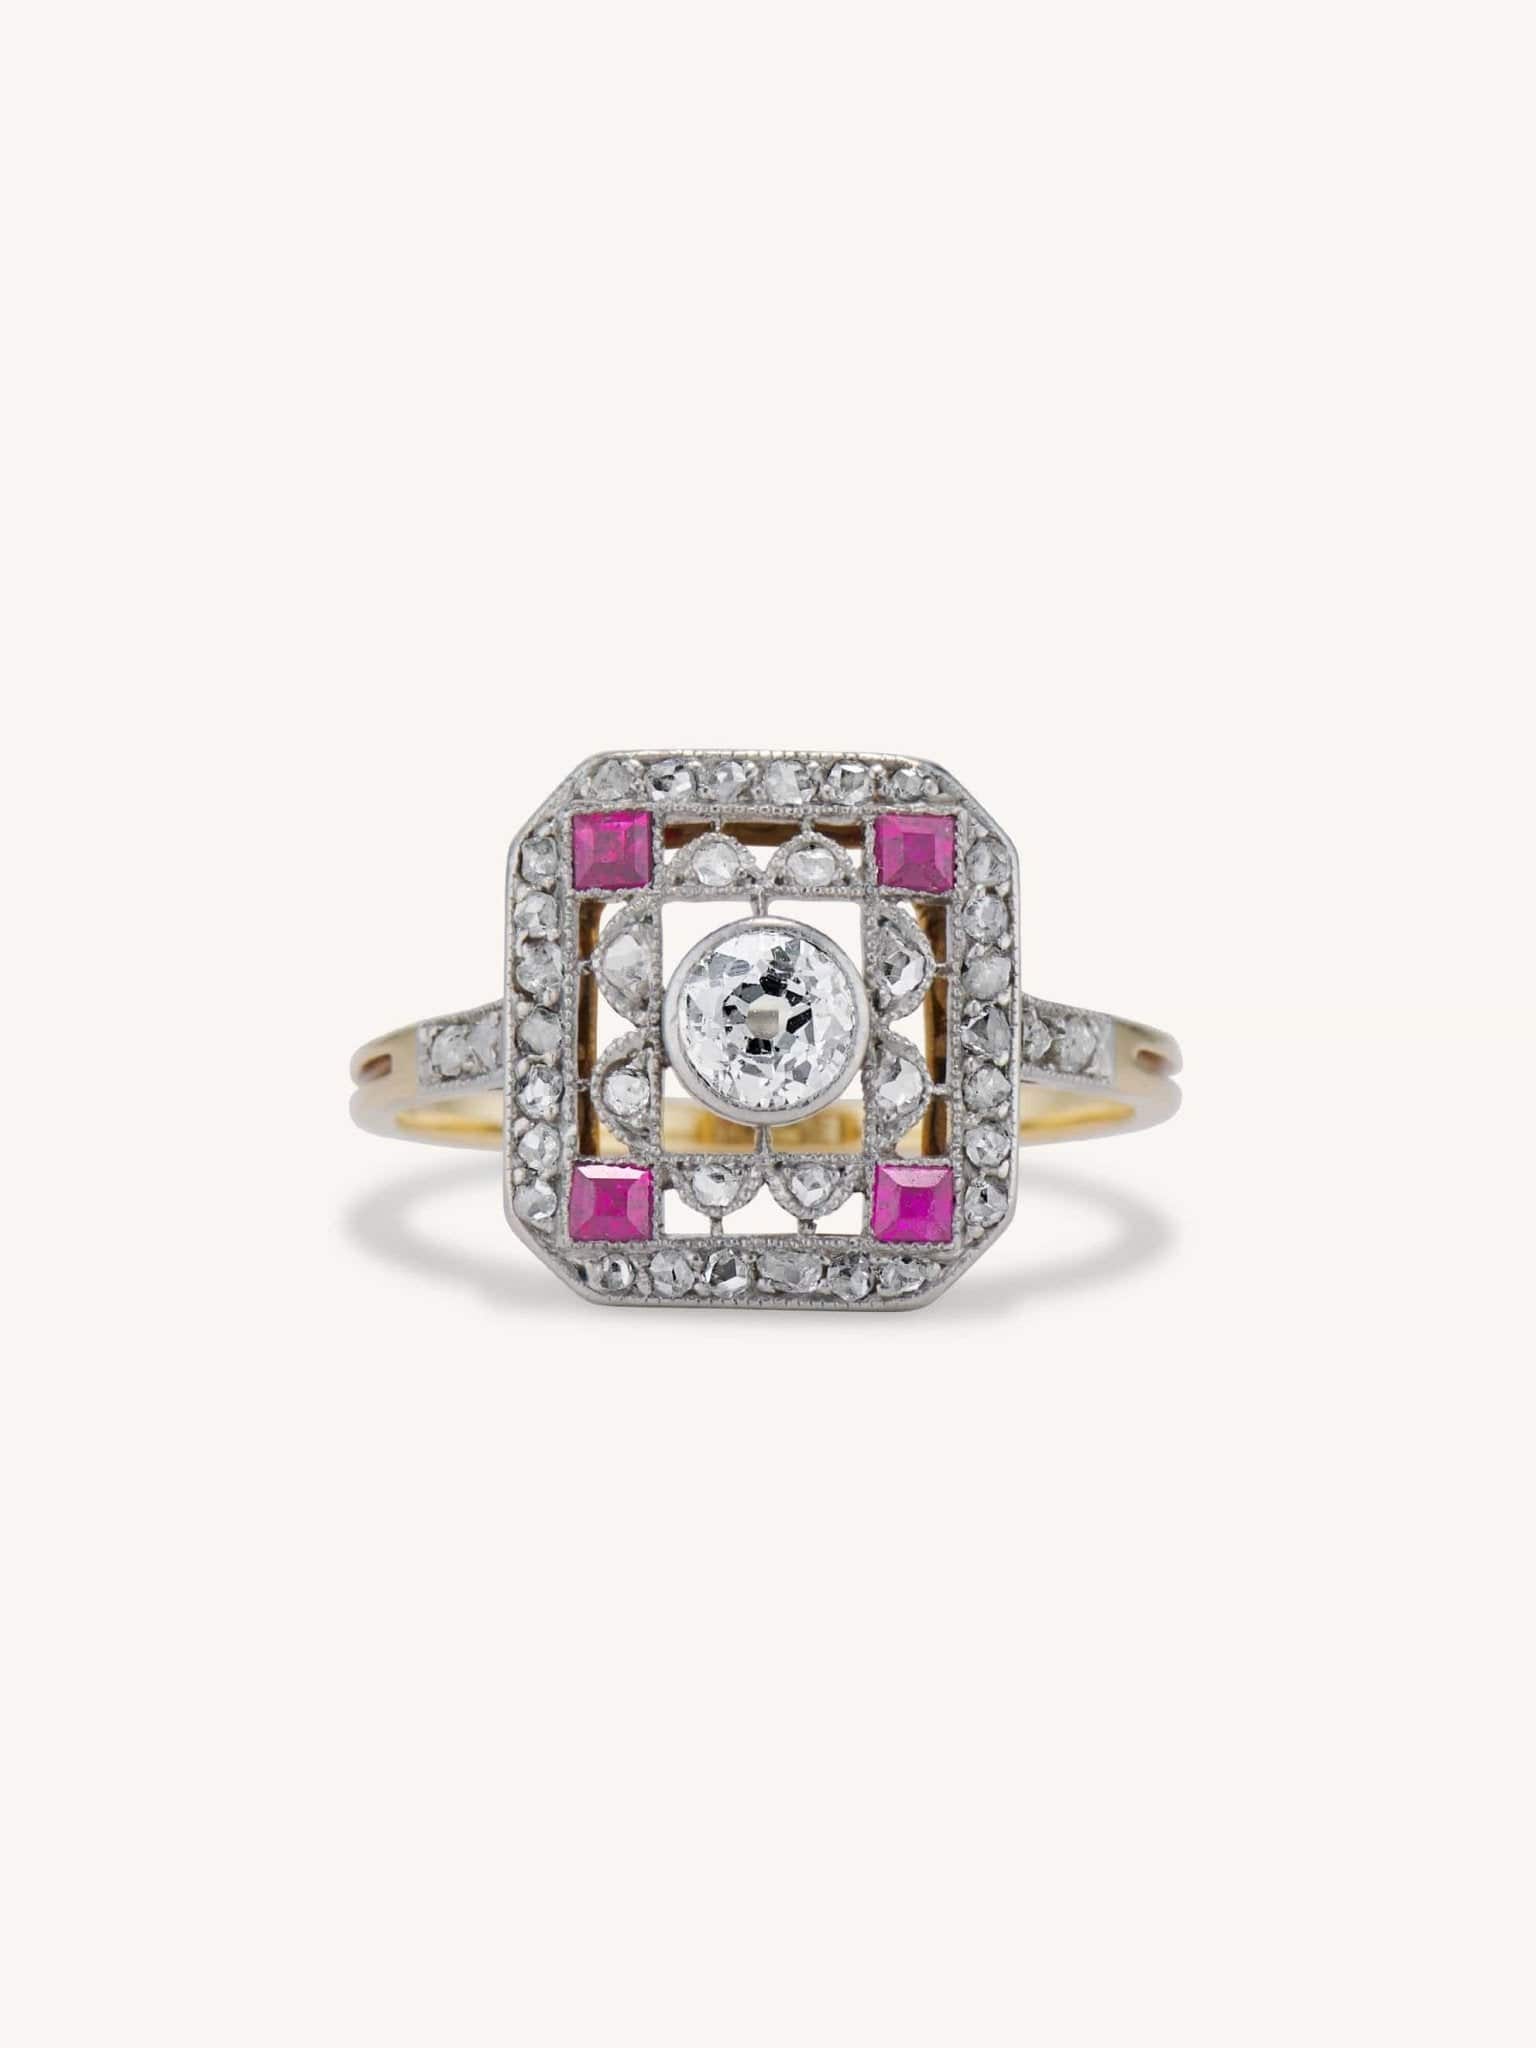 Authentic Antique Square Diamond Engagement Ring – Vintage Diamond Ring